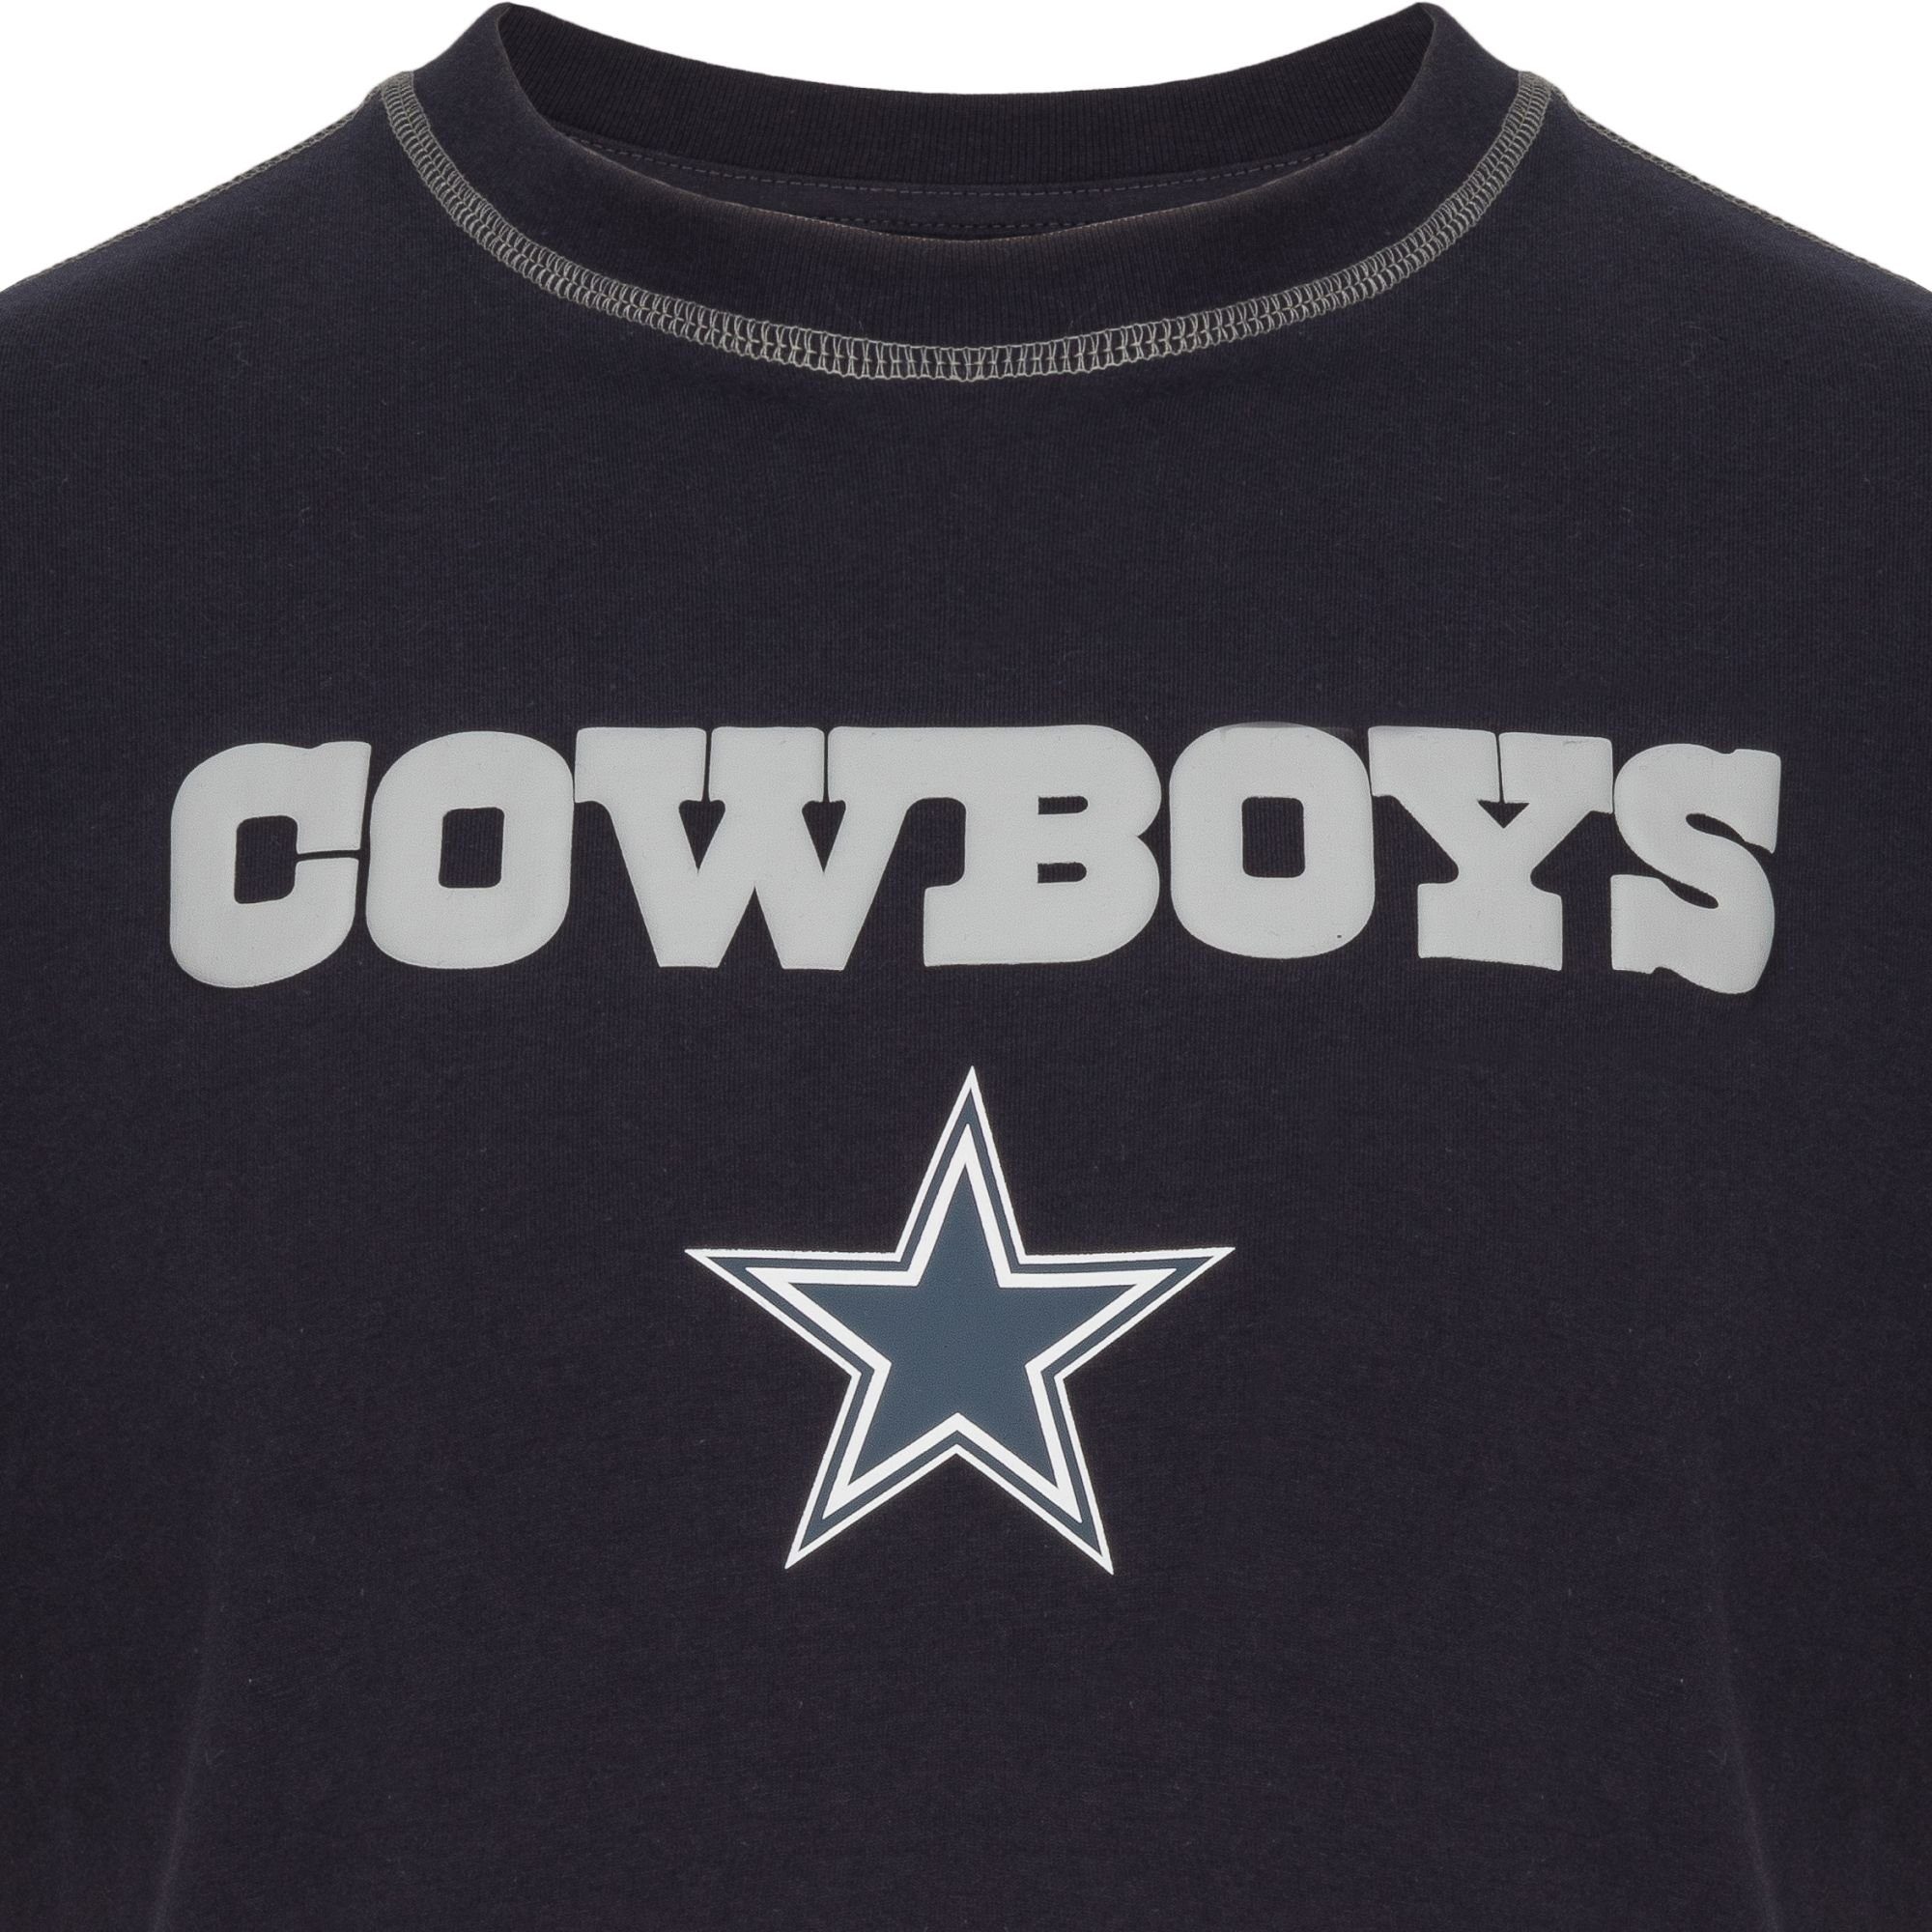 Print-Shirt Cowboys NFL SIDELINE New Dallas Era